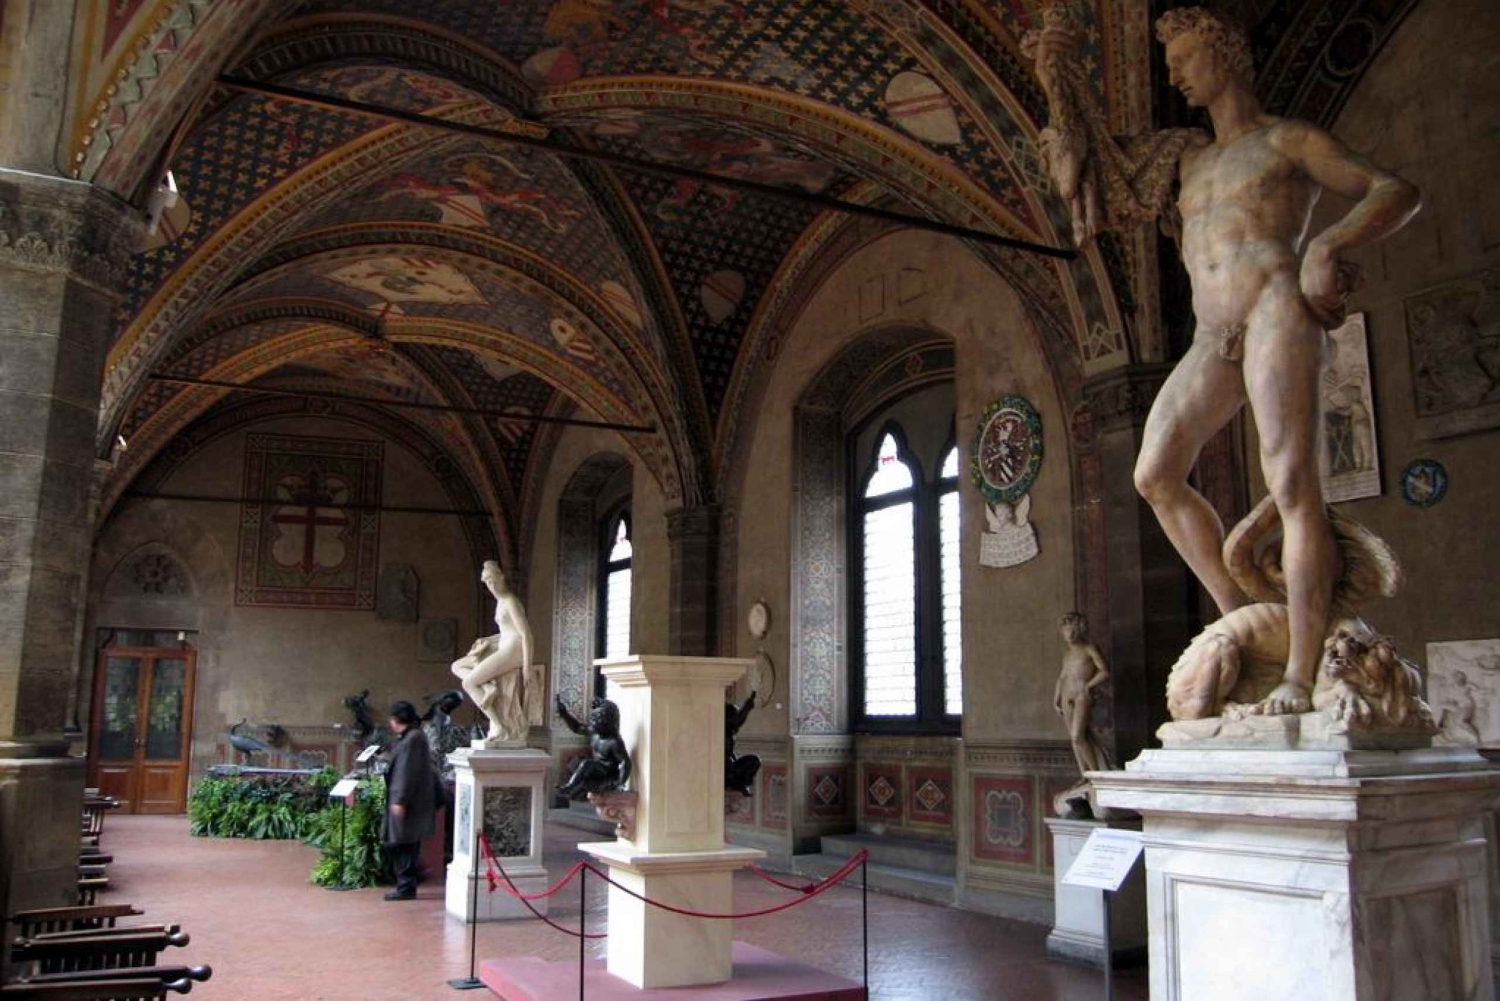 Michelangelo i Donatello: wycieczka do muzeum Bargello